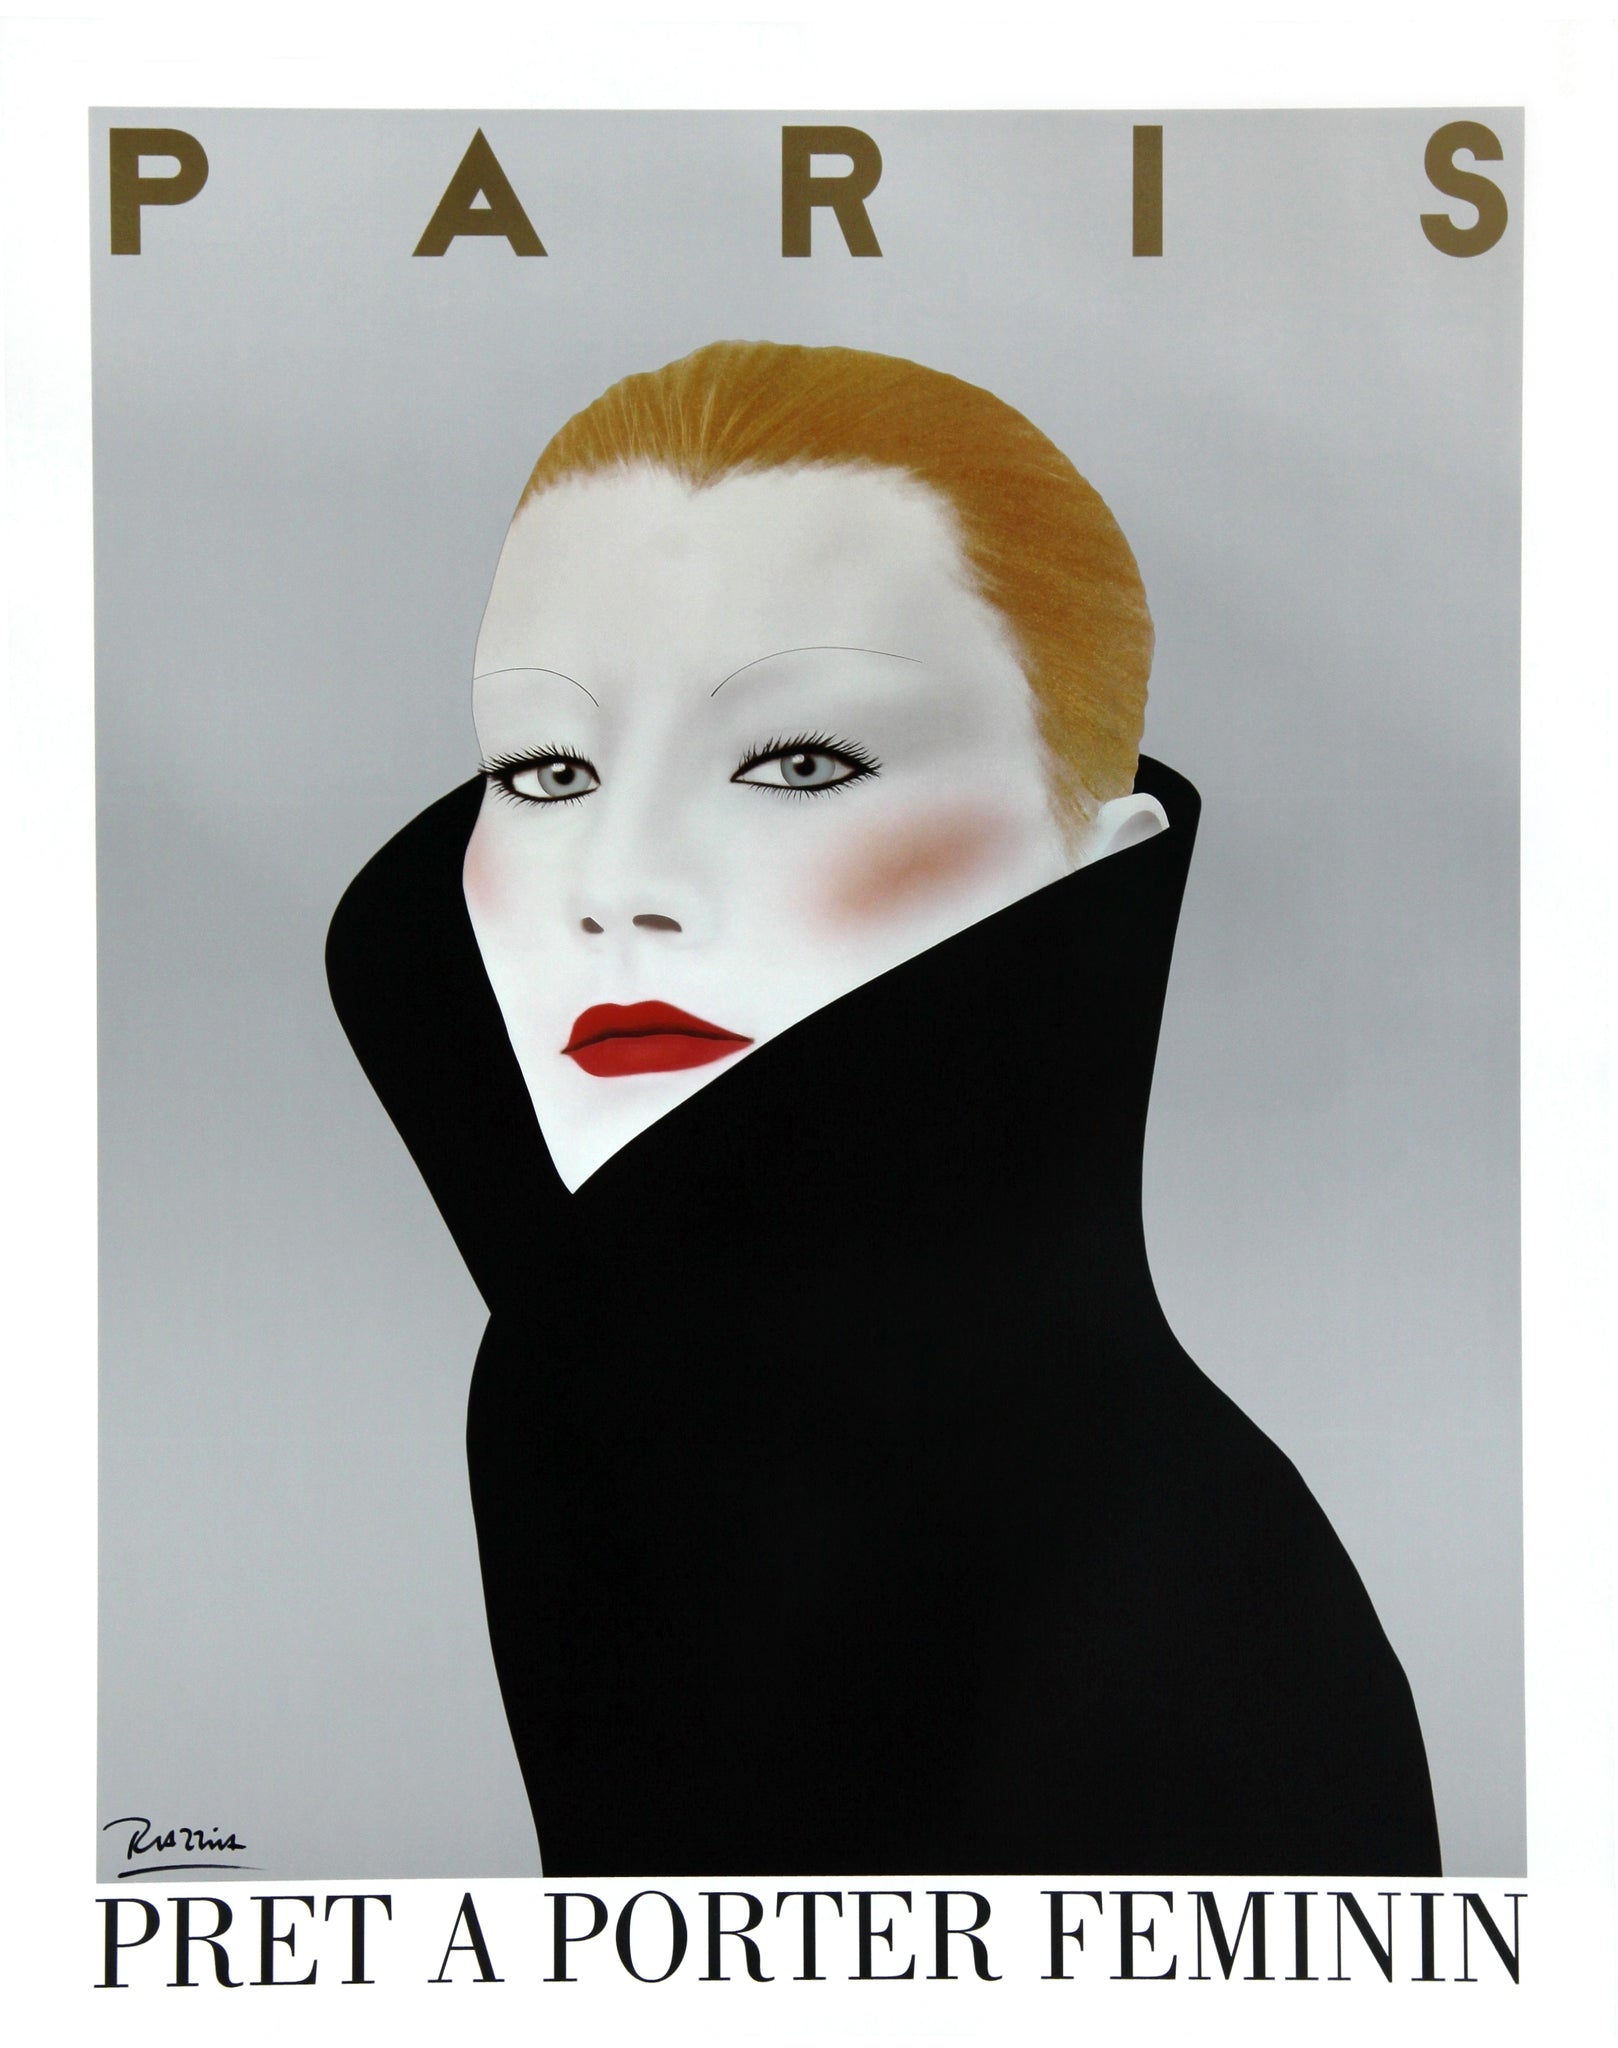 Affiche Prêt a porter feminin - Paris Razzia 1982